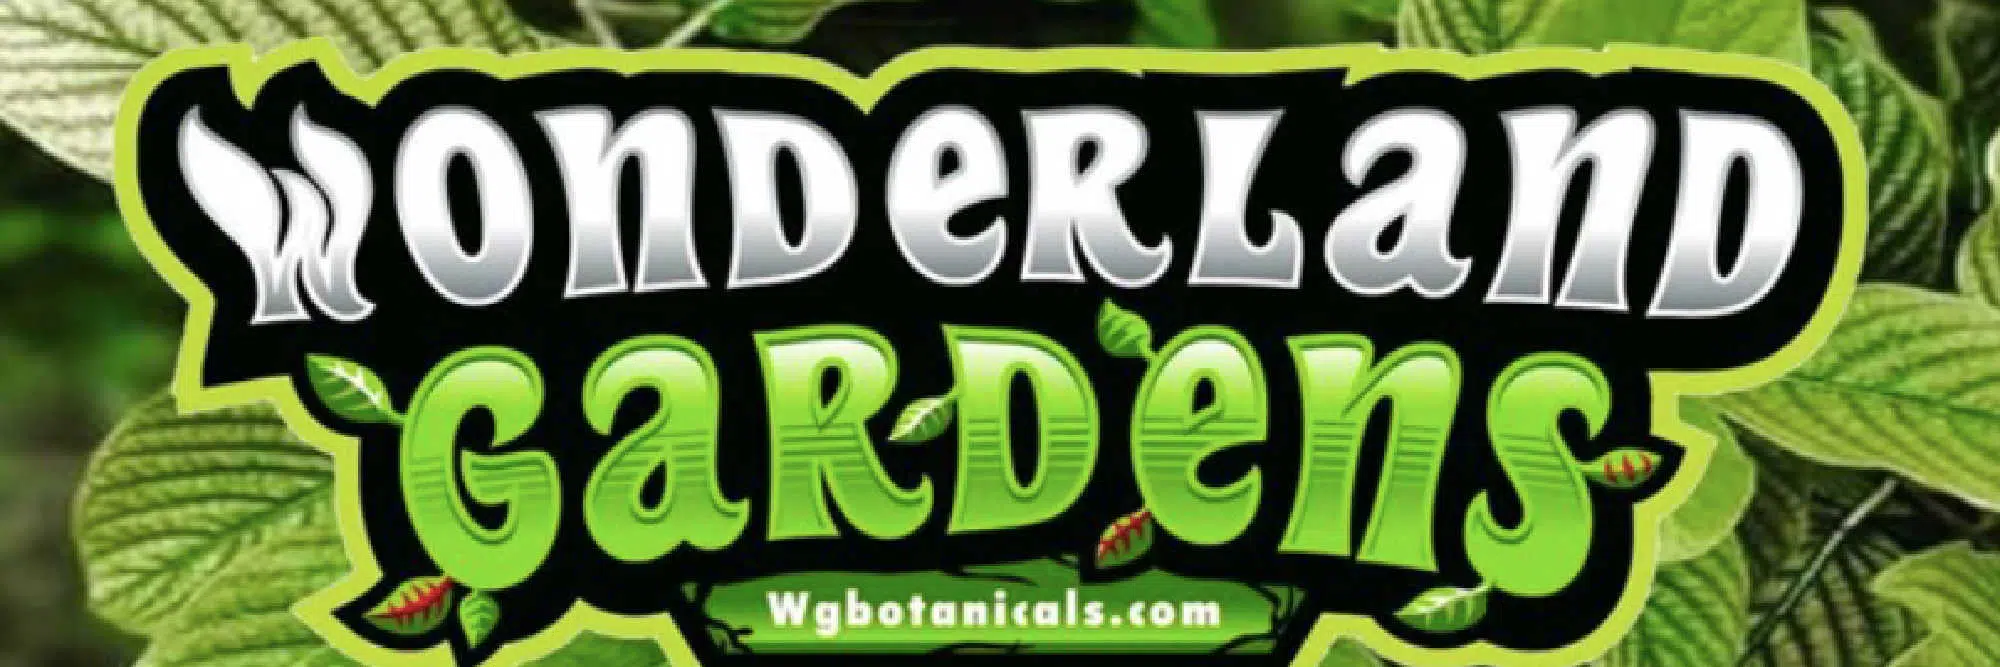 image of wonderland gardens logo